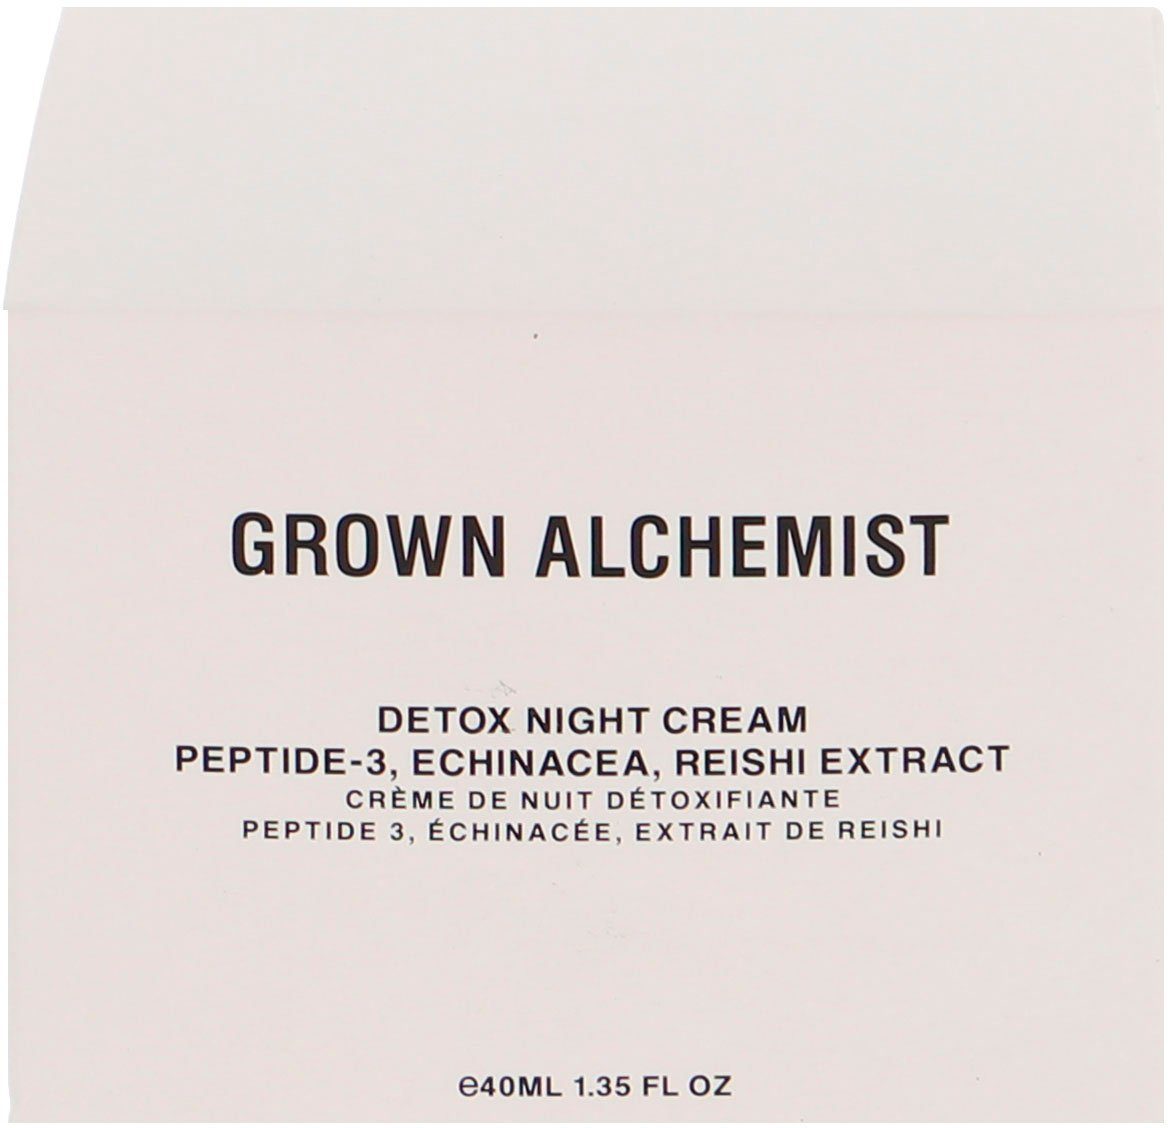 GROWN ALCHEMIST Nachtcreme Echinacea, Reishi Detox Extract Cream, Night Peptide-3